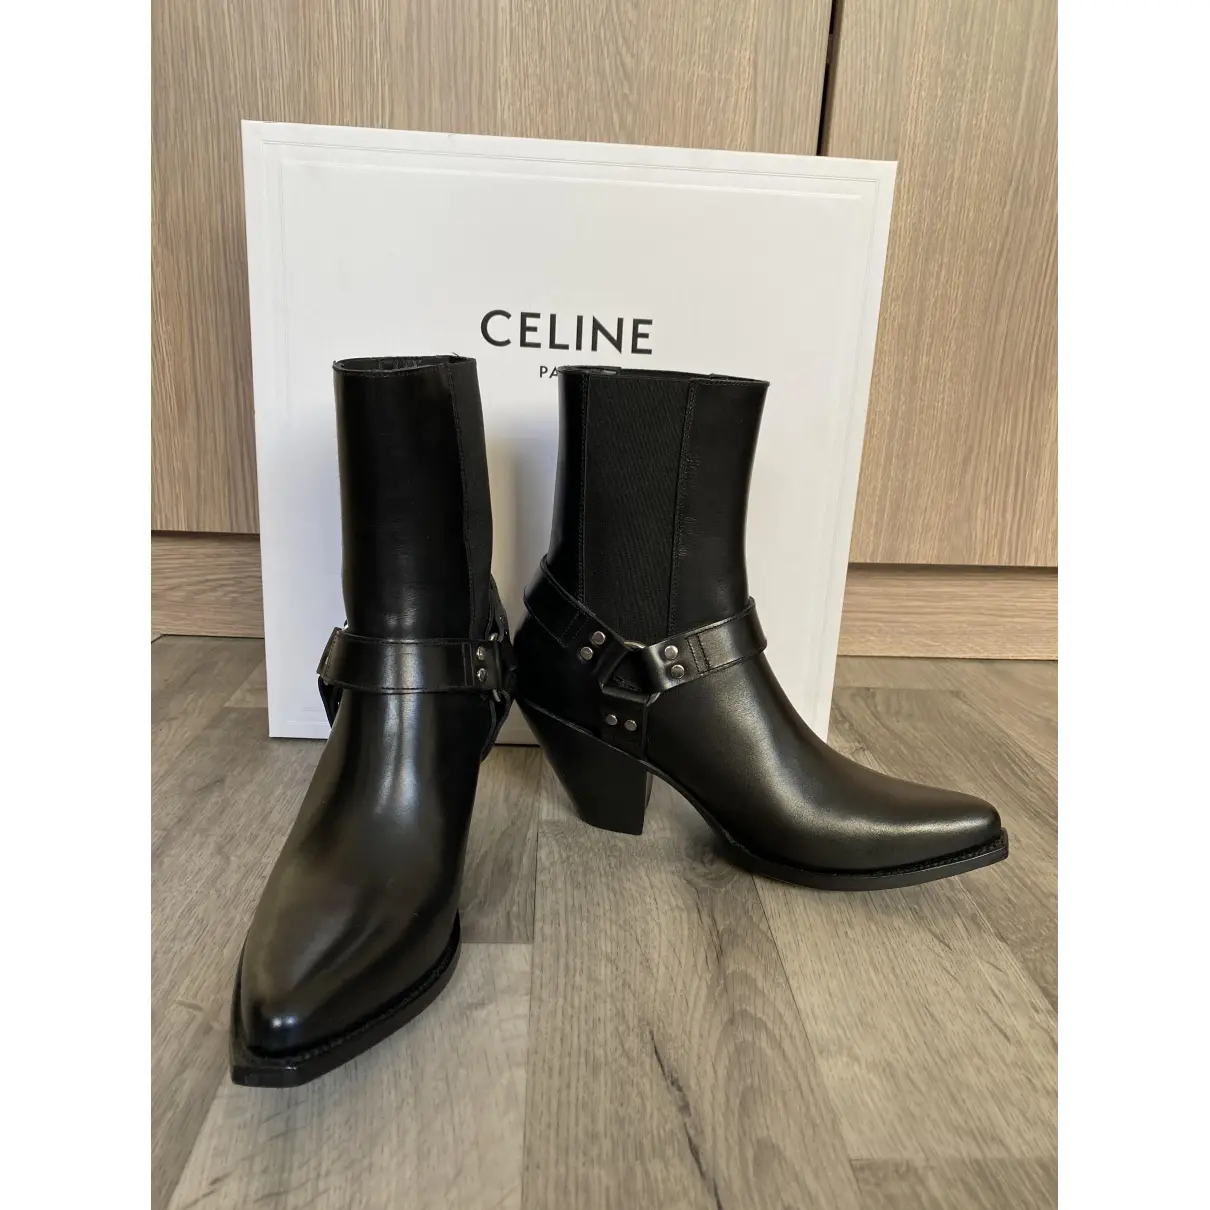 Buy Celine Berlin leather biker boots online